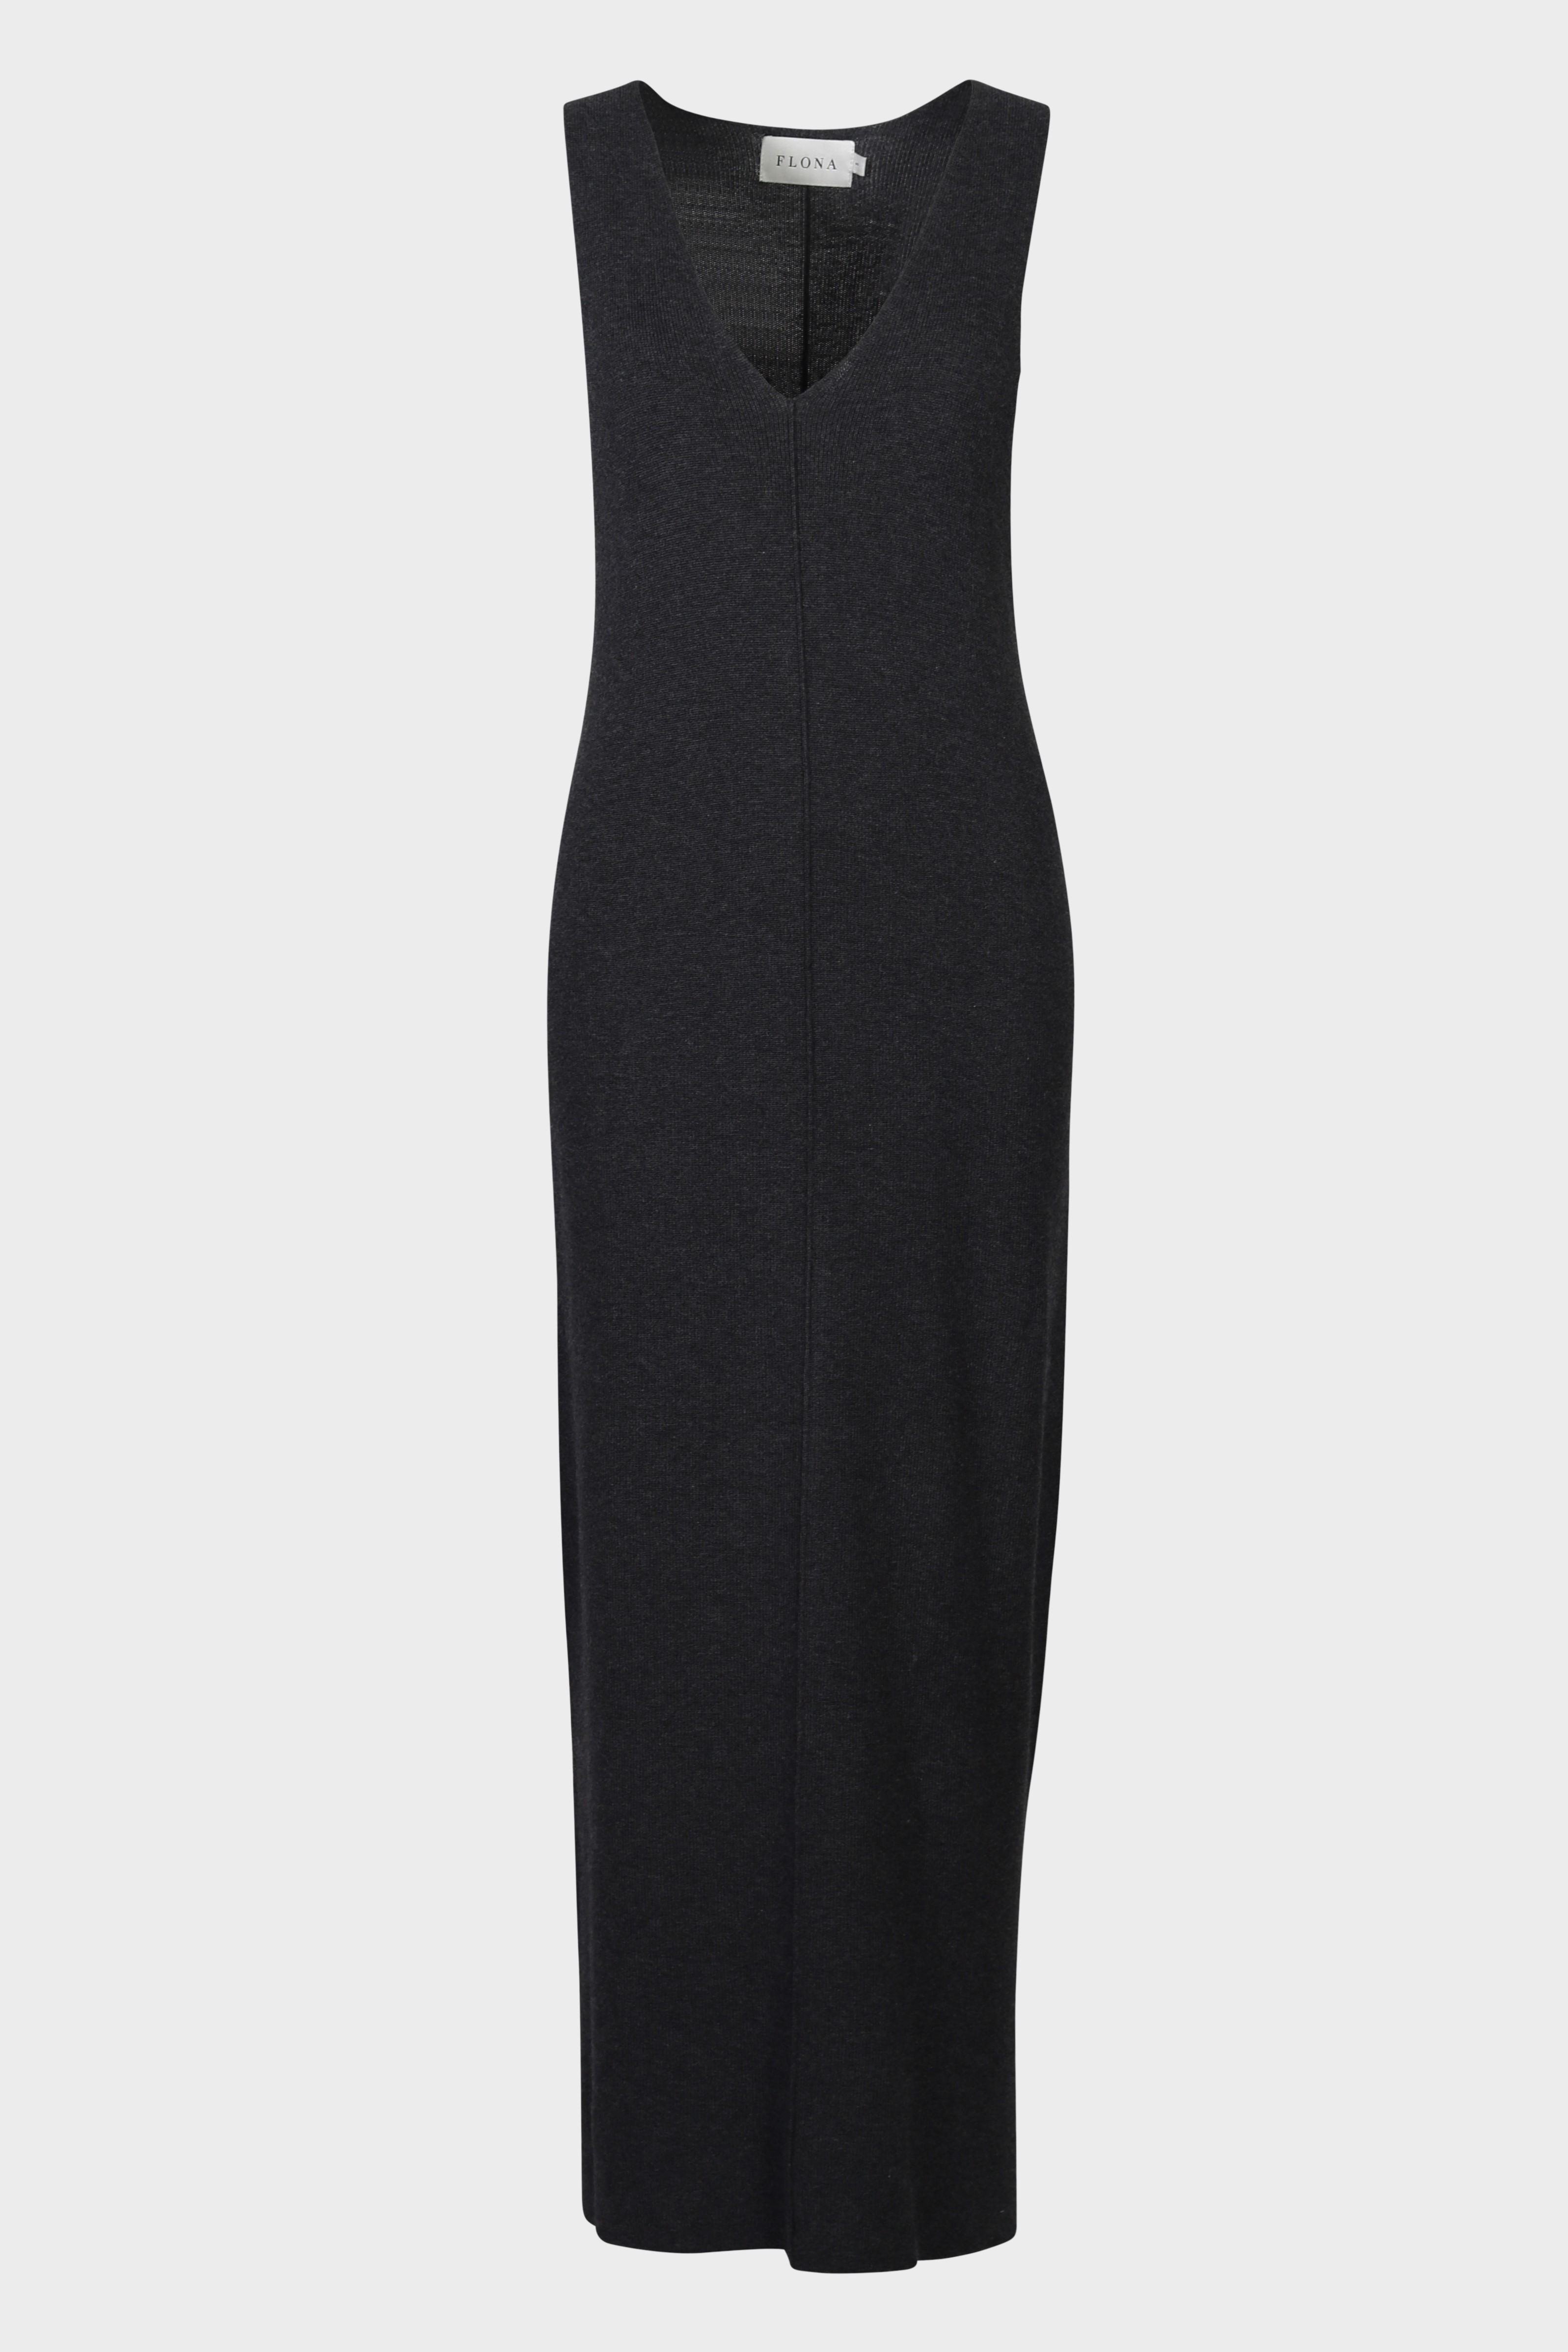 FLONA Cotton/ Cashmere Knit Dress in Dark Grey XS